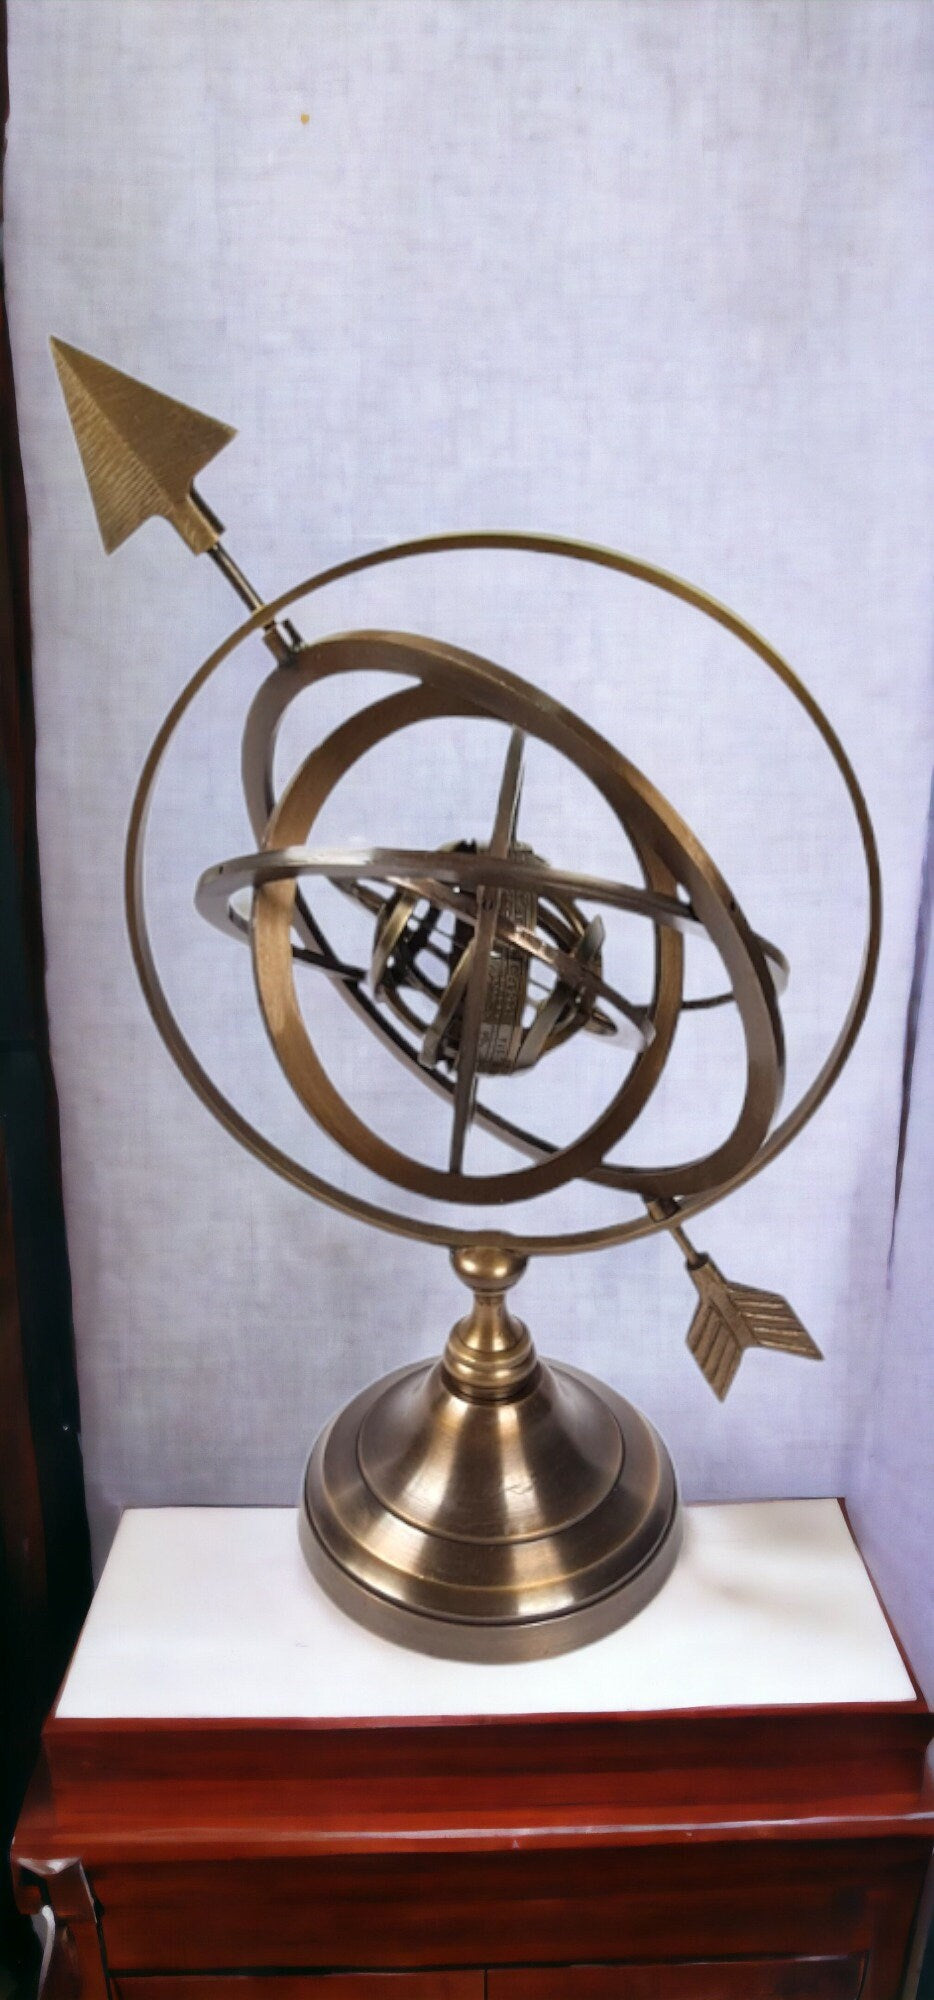 Celestial Armillary Sphere - Vintage Astronomy Decor, Educational Tool, Antique-Style Celestial Navigation, Zodiac Signs, Astronomer Gift